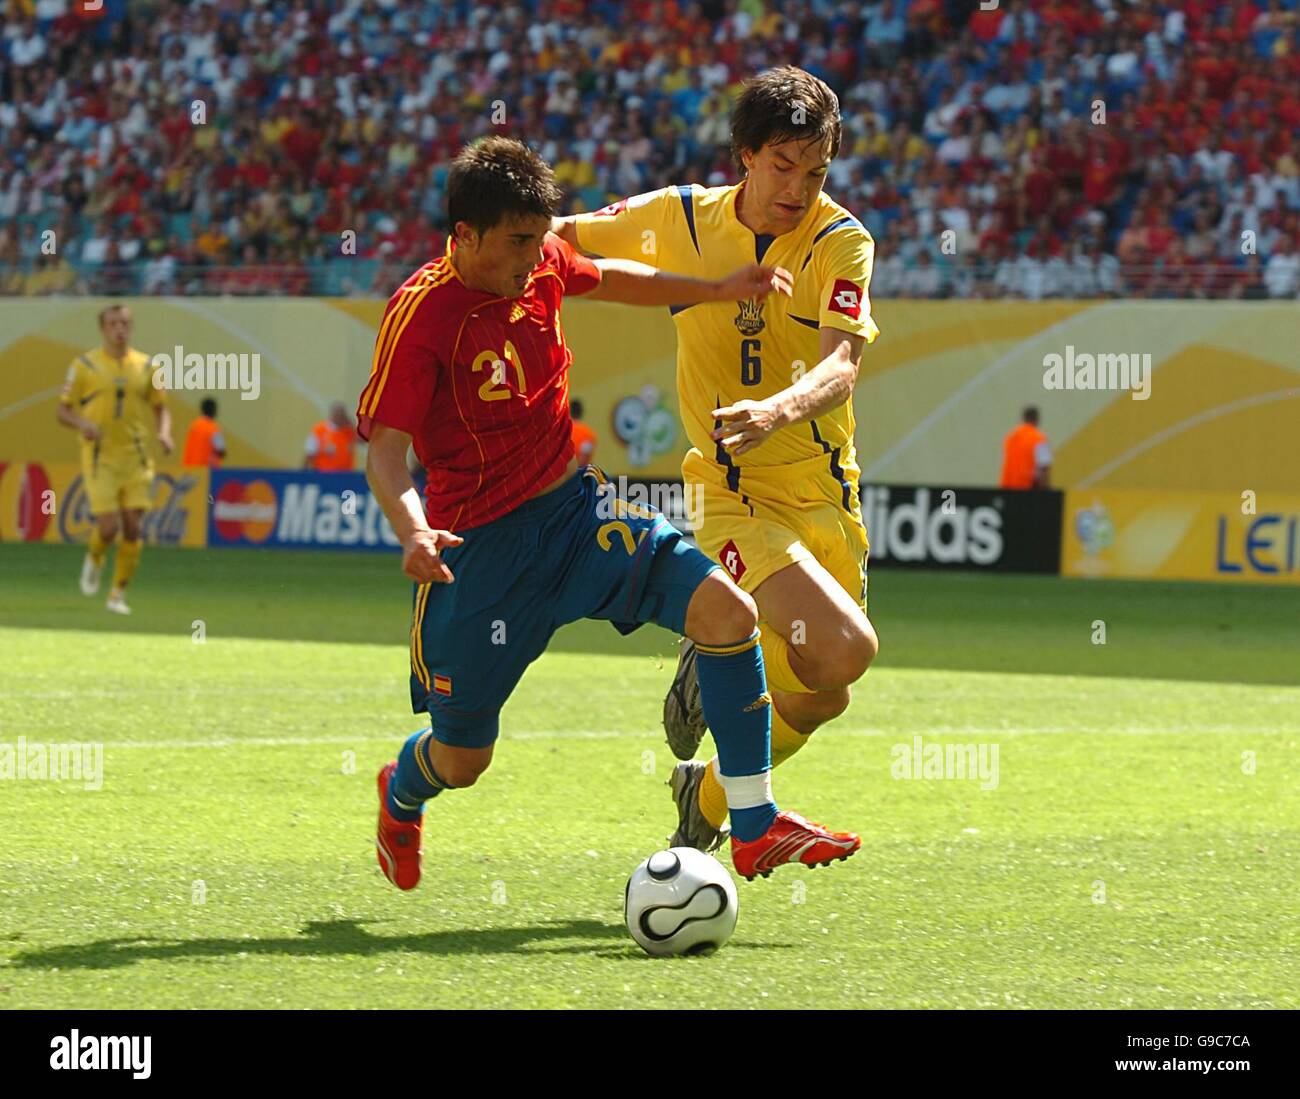 Spain's David Villa shoots under pressure from Ukraine's Andriy Rusol Stock Photo